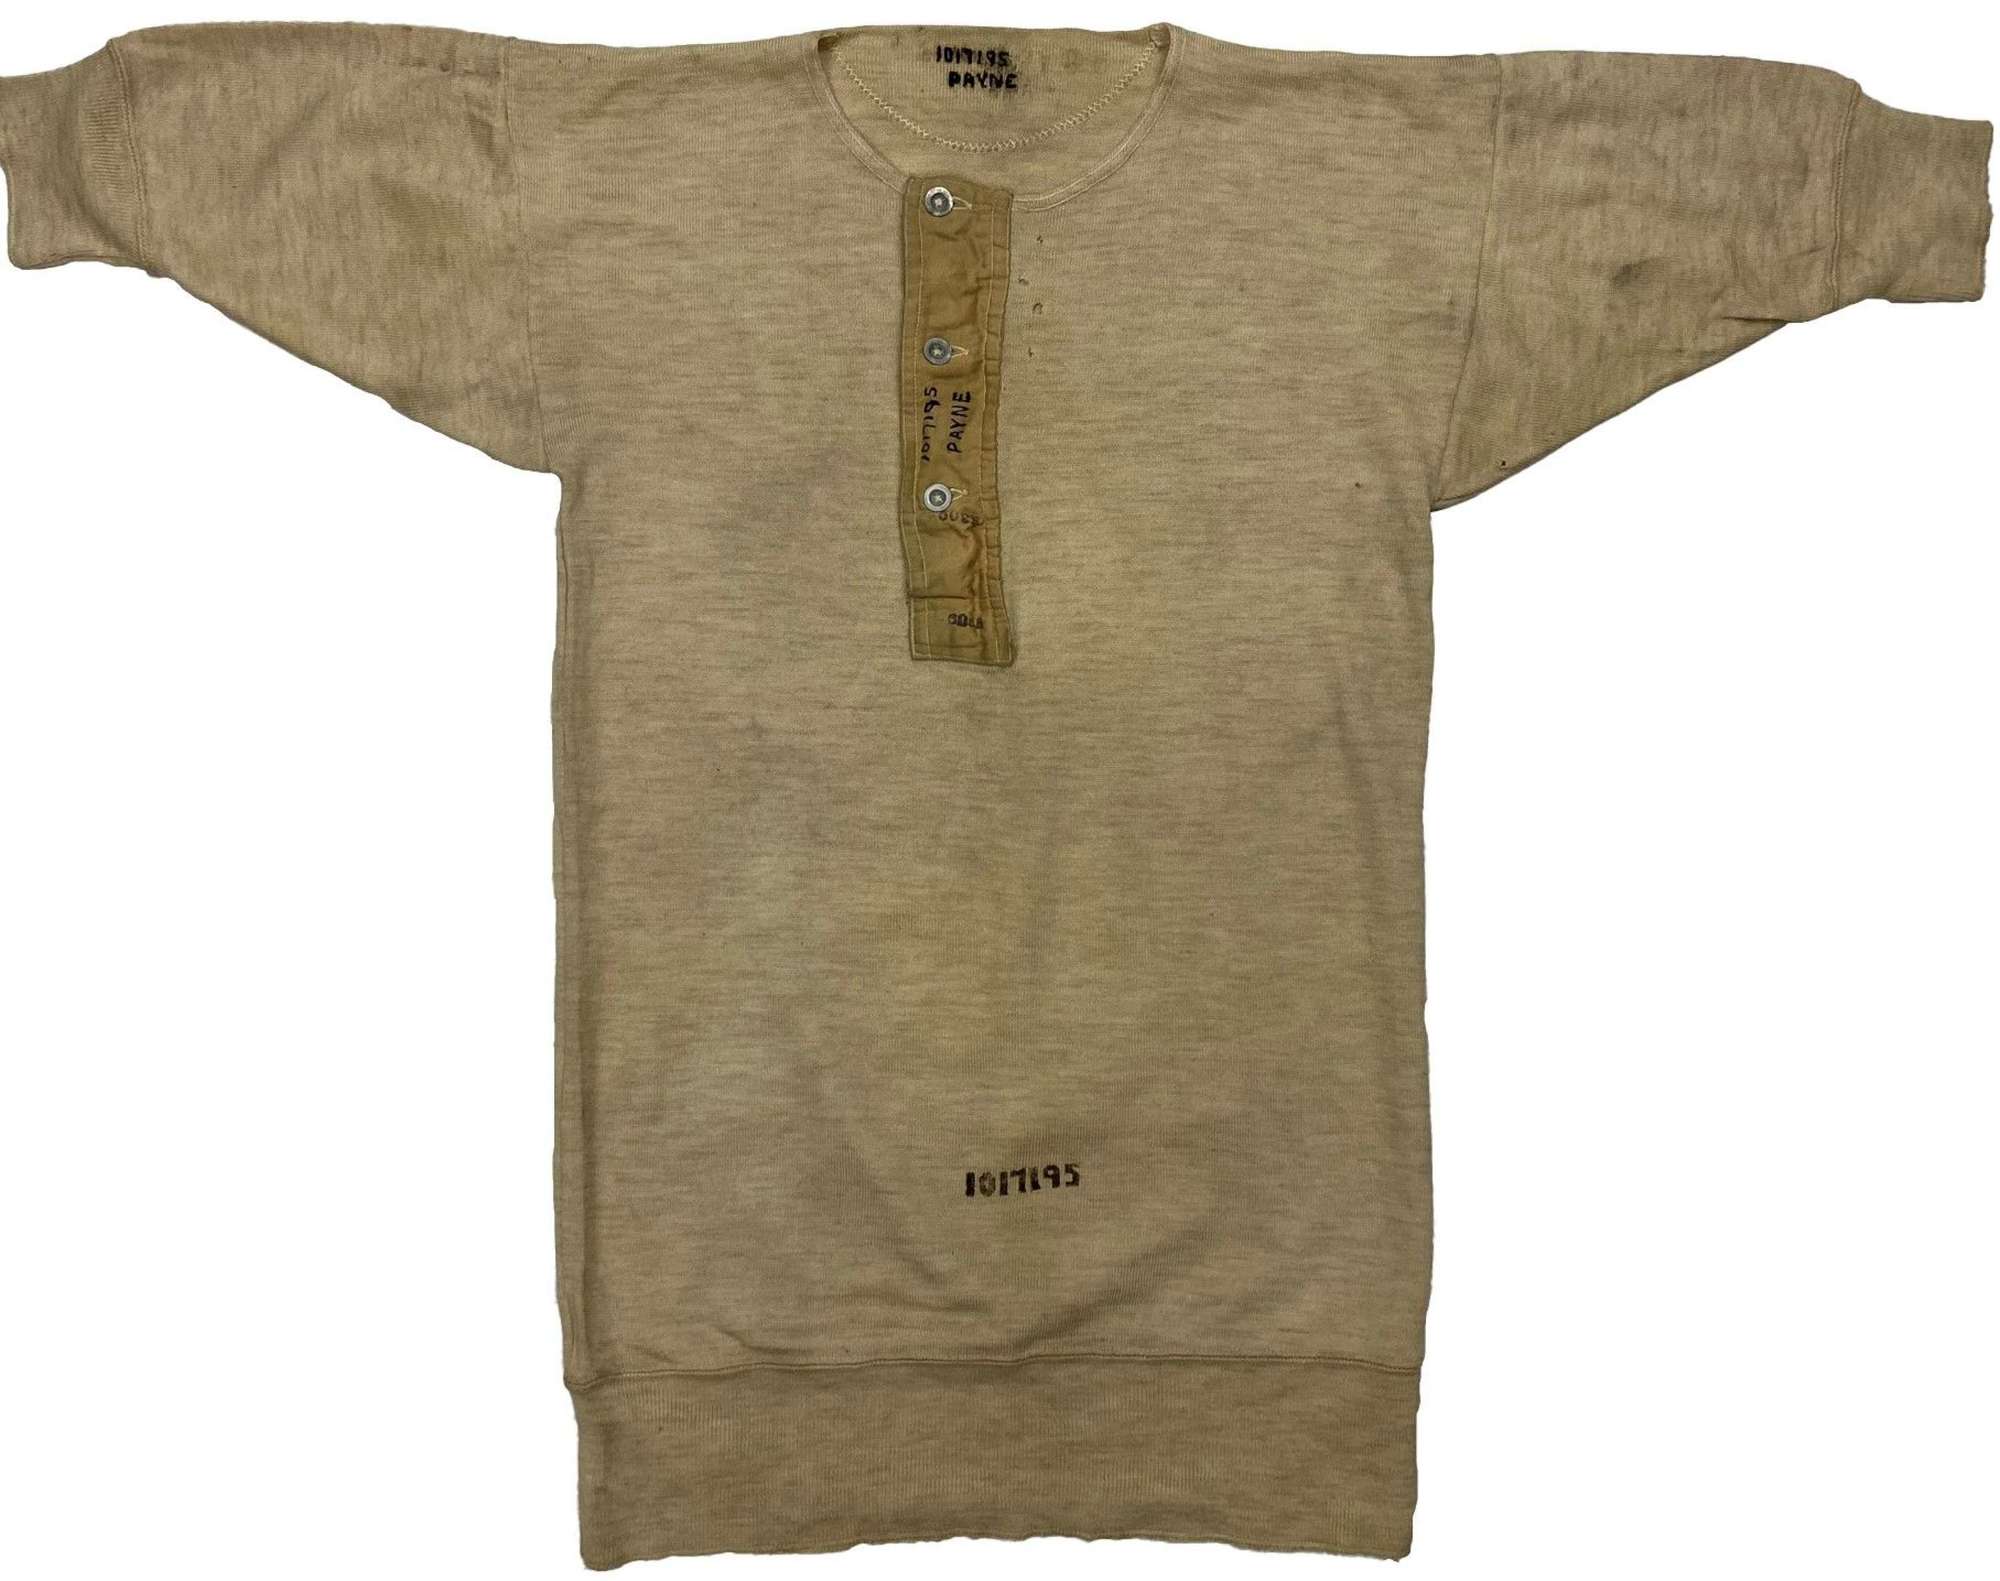 Original WW2 RAF Woollen Undershirt - Payne